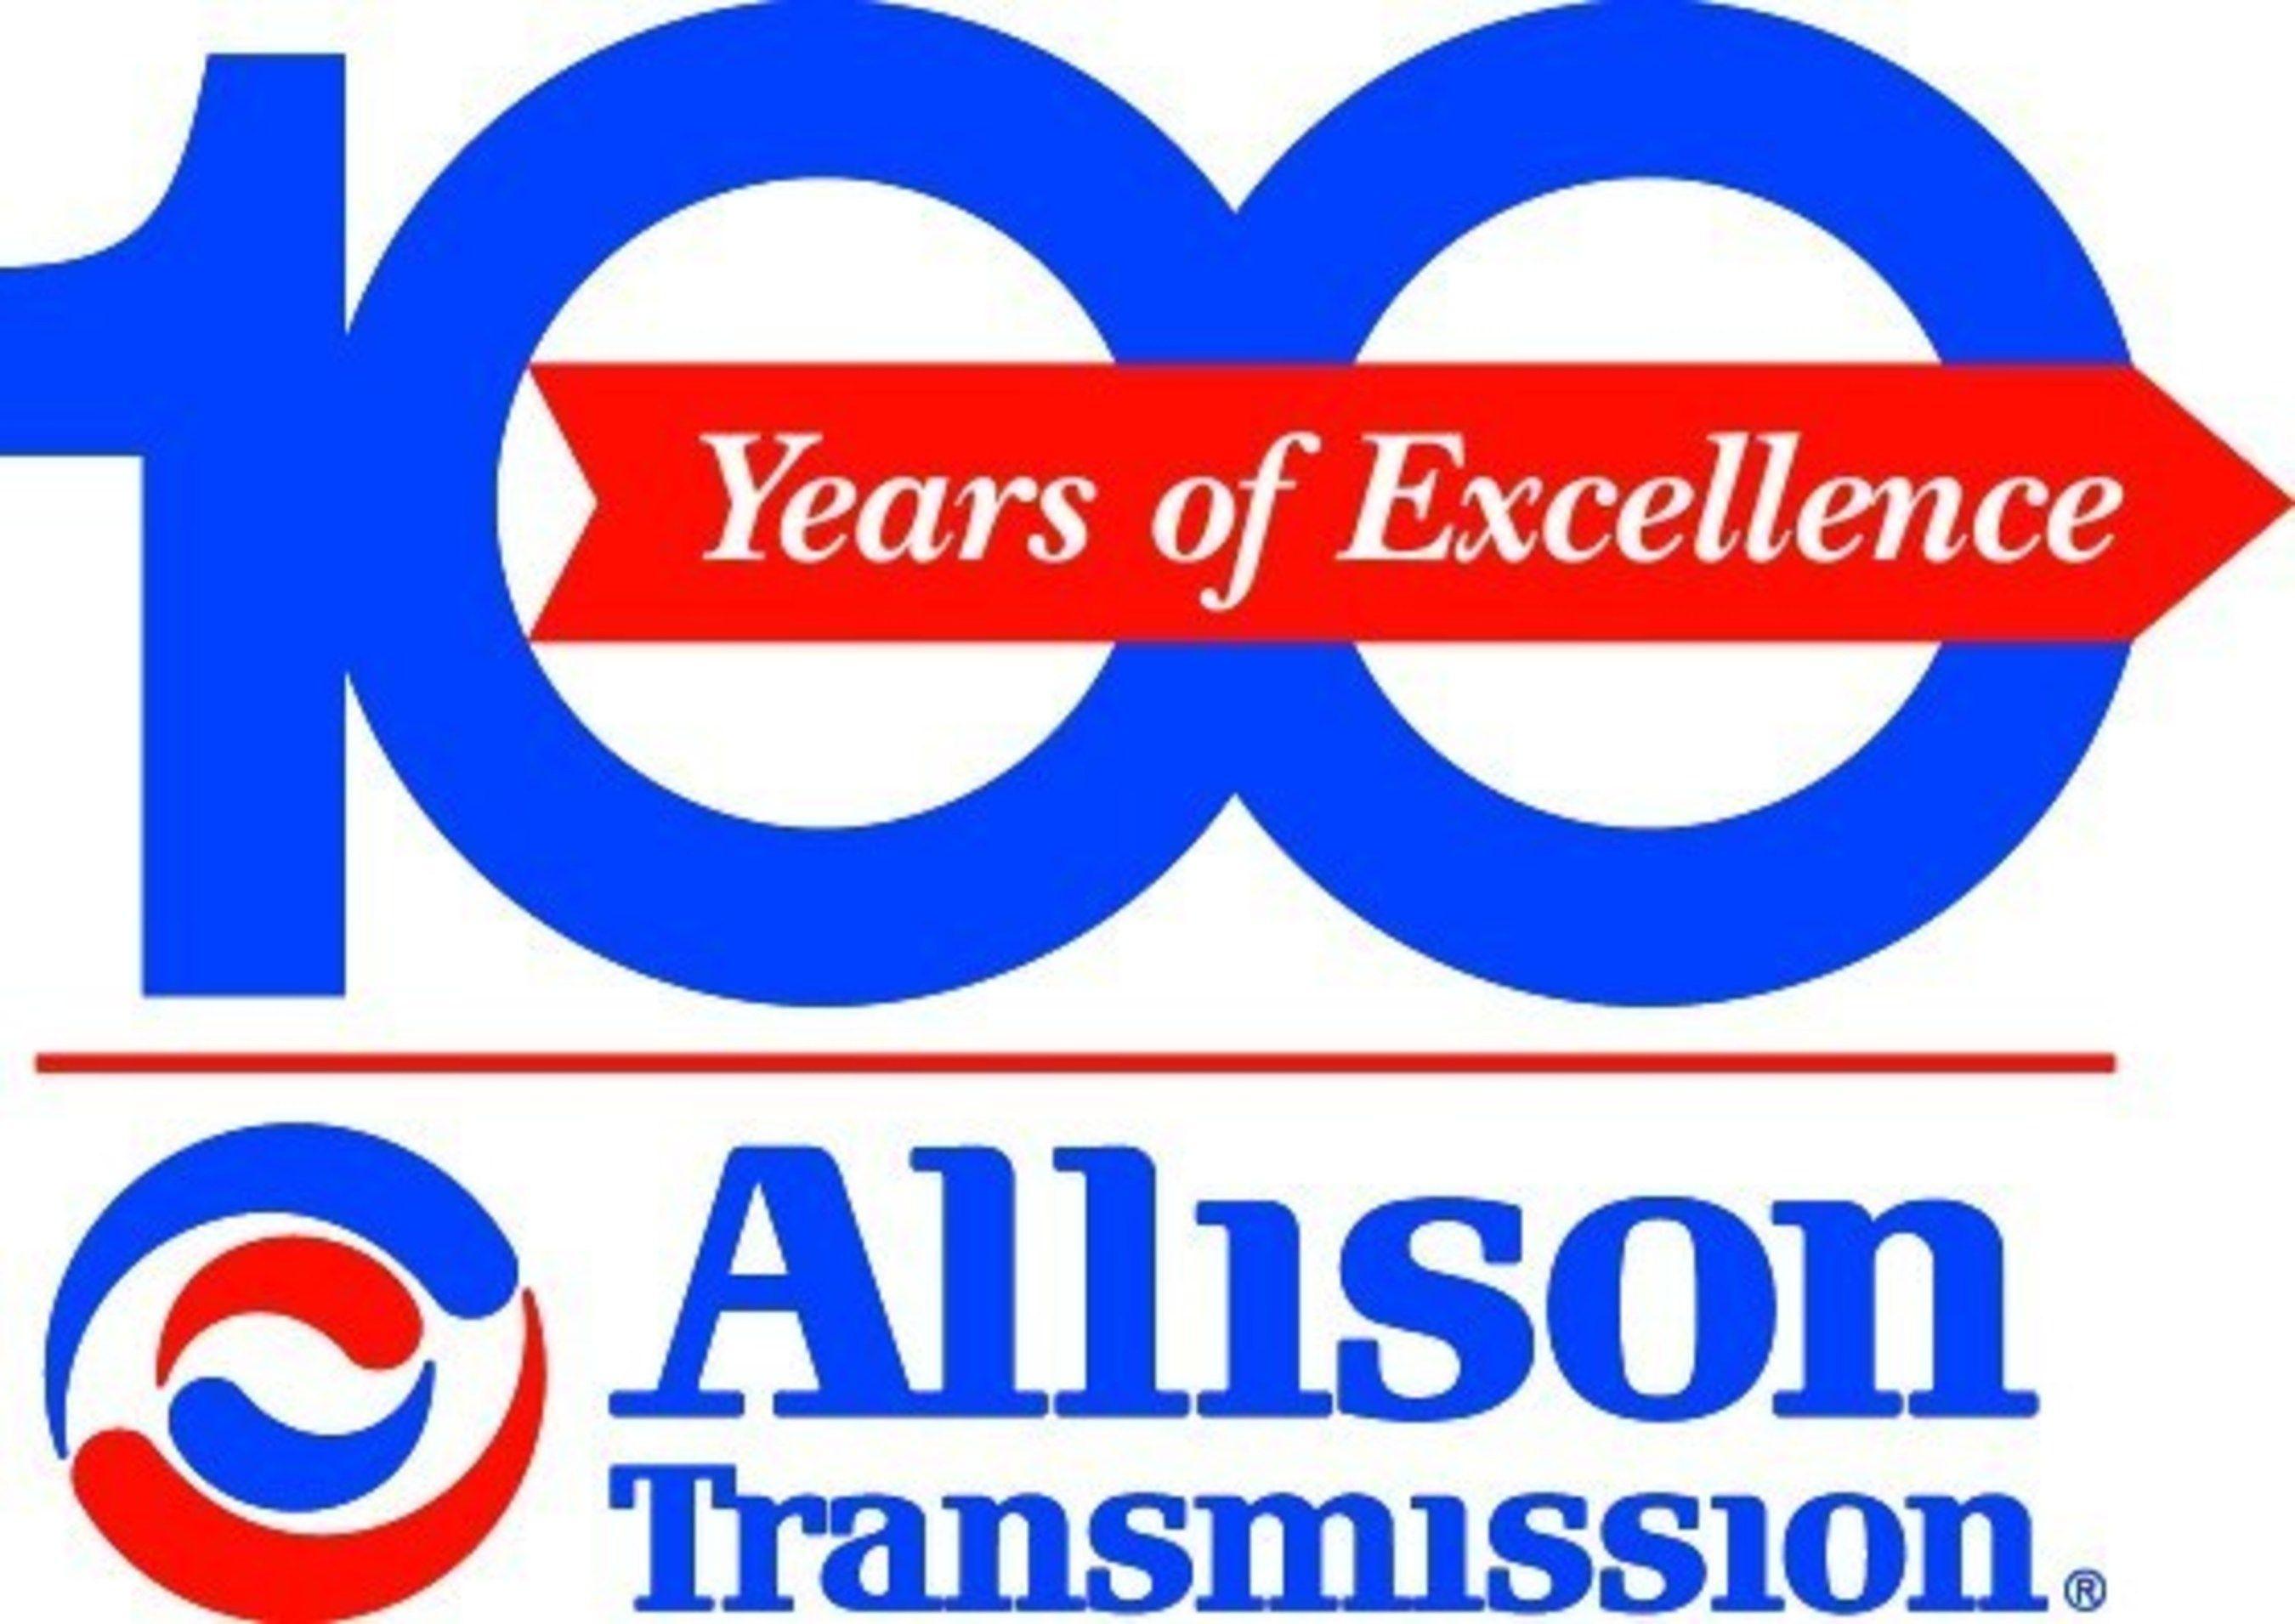 Allison Transmission Logo - Allison Transmission announces xFE models with technology to further